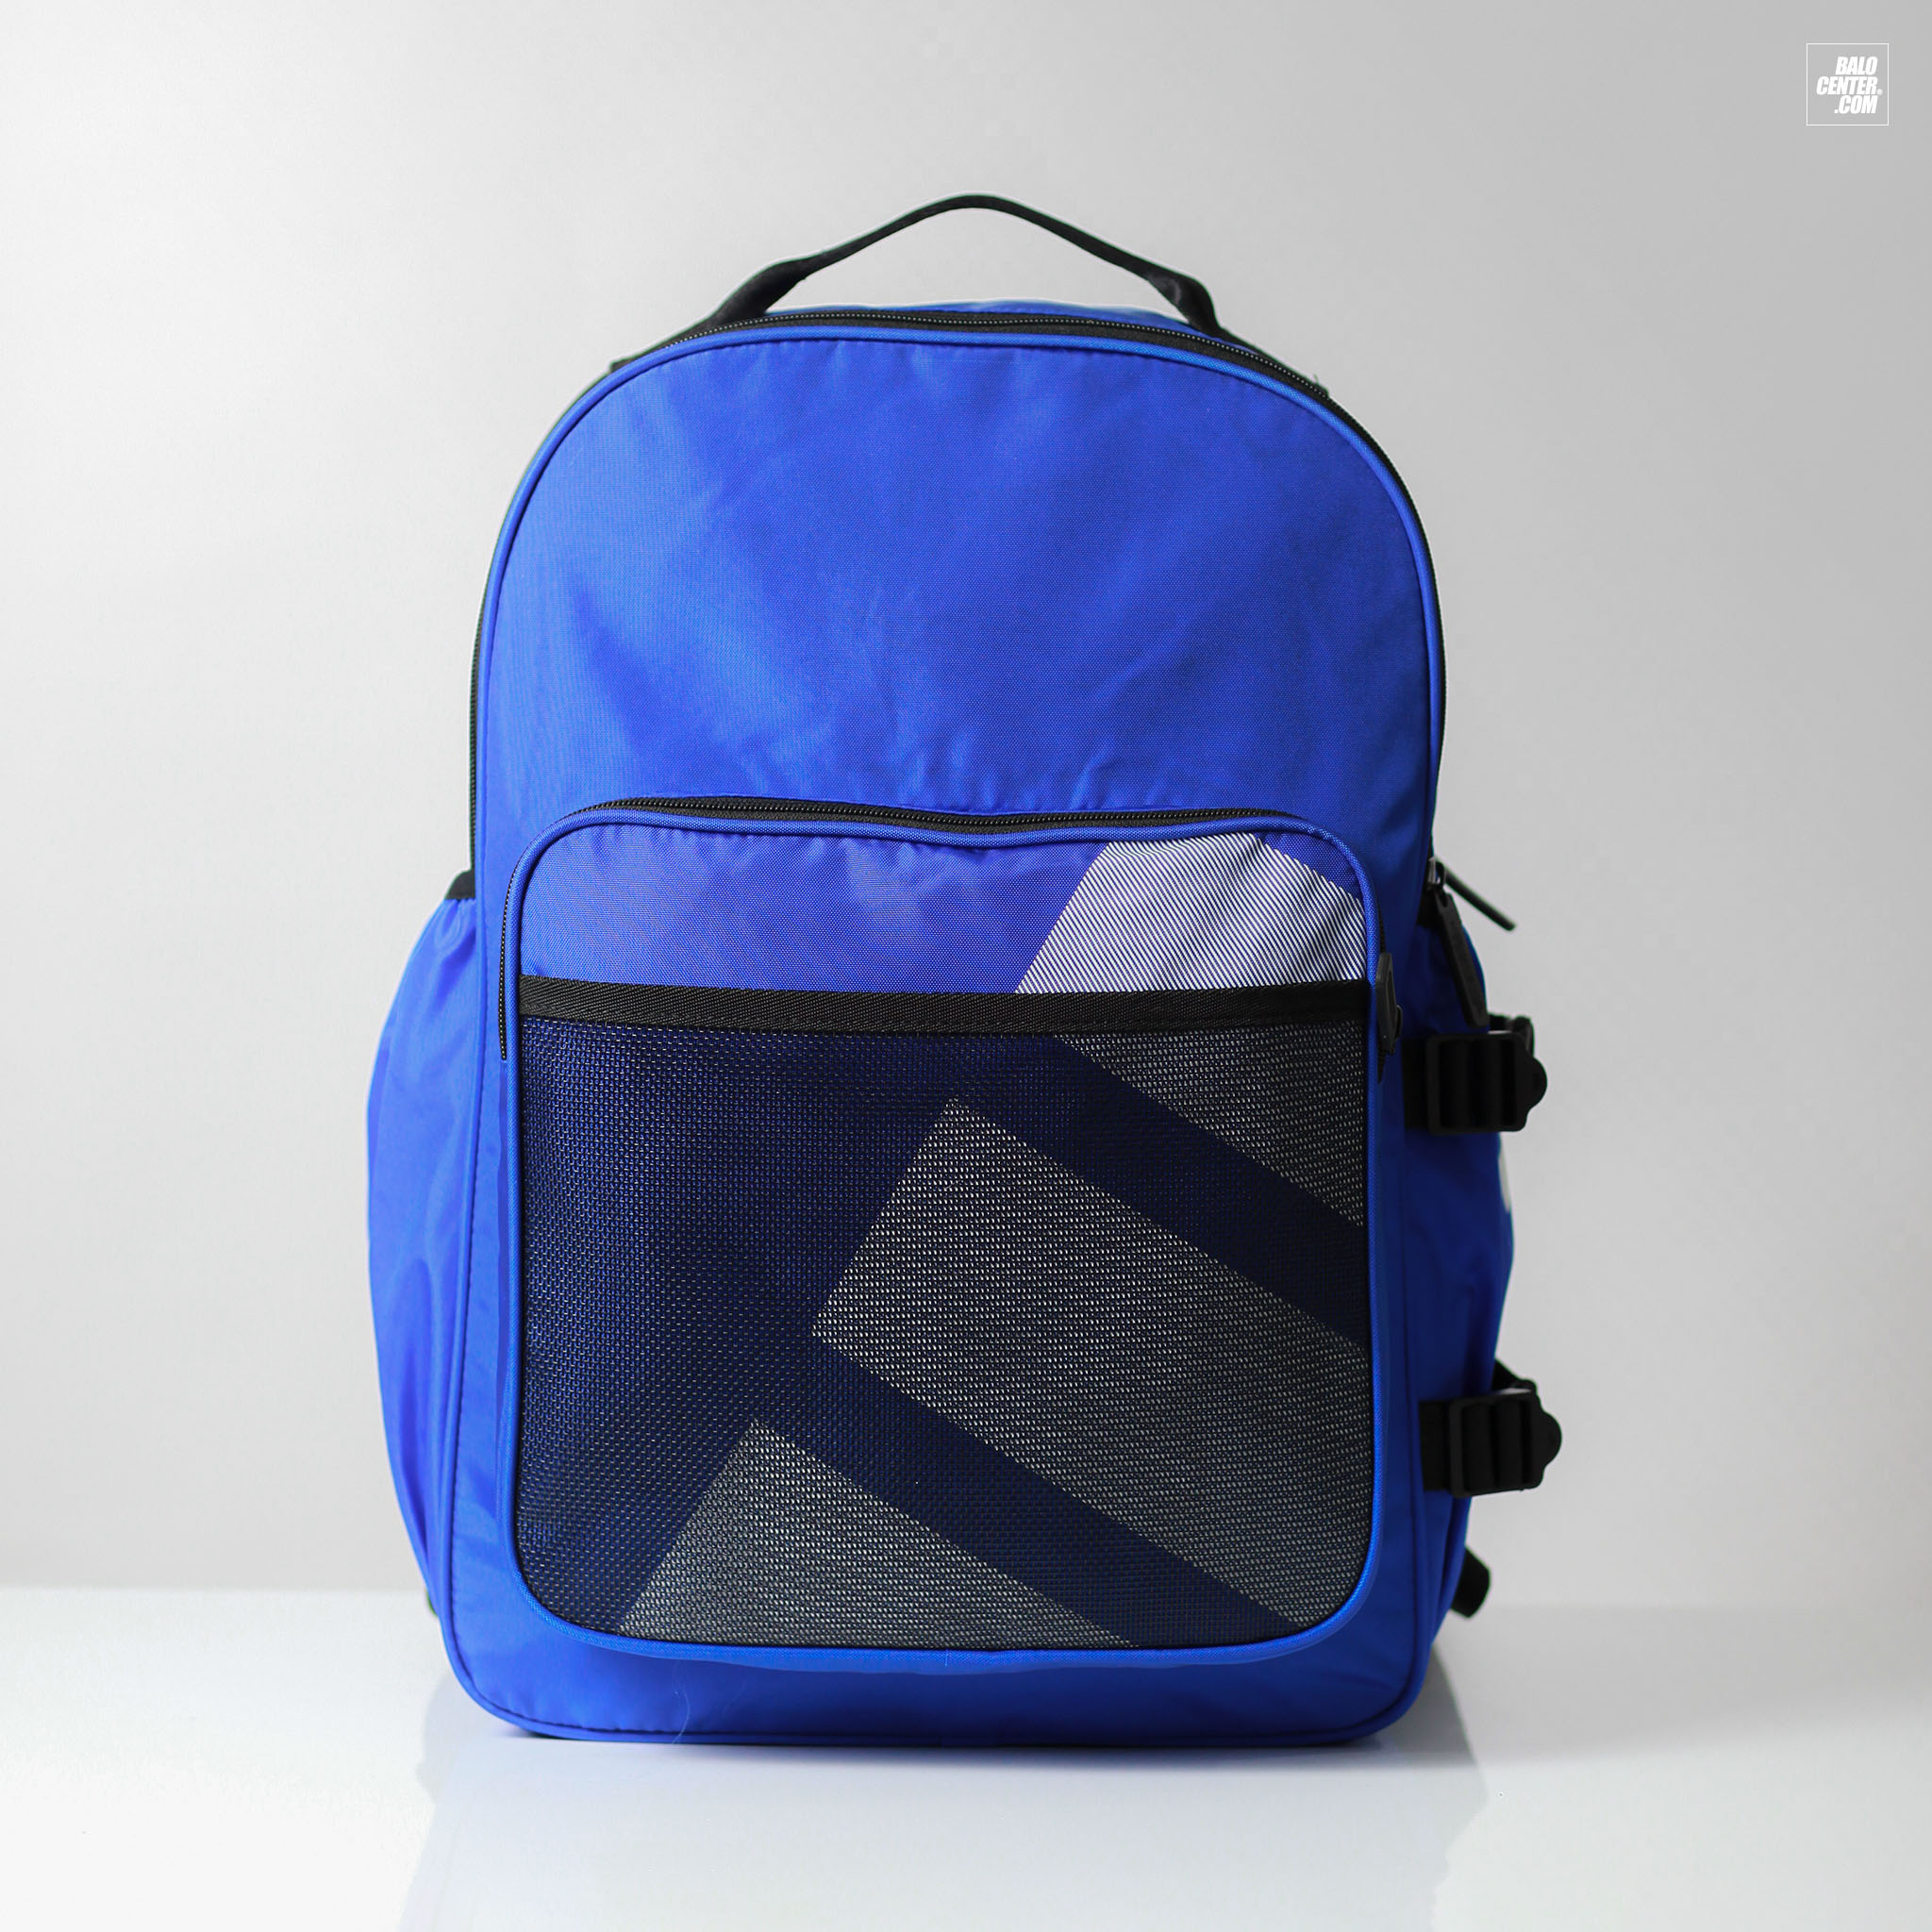 Ba lô thể thao Adidas EQT Backpack Blue/White | BaloCenter.com –  BaloCenter.com - Shop balo ĐẸP XUẤT SẮC tại Việt Nam